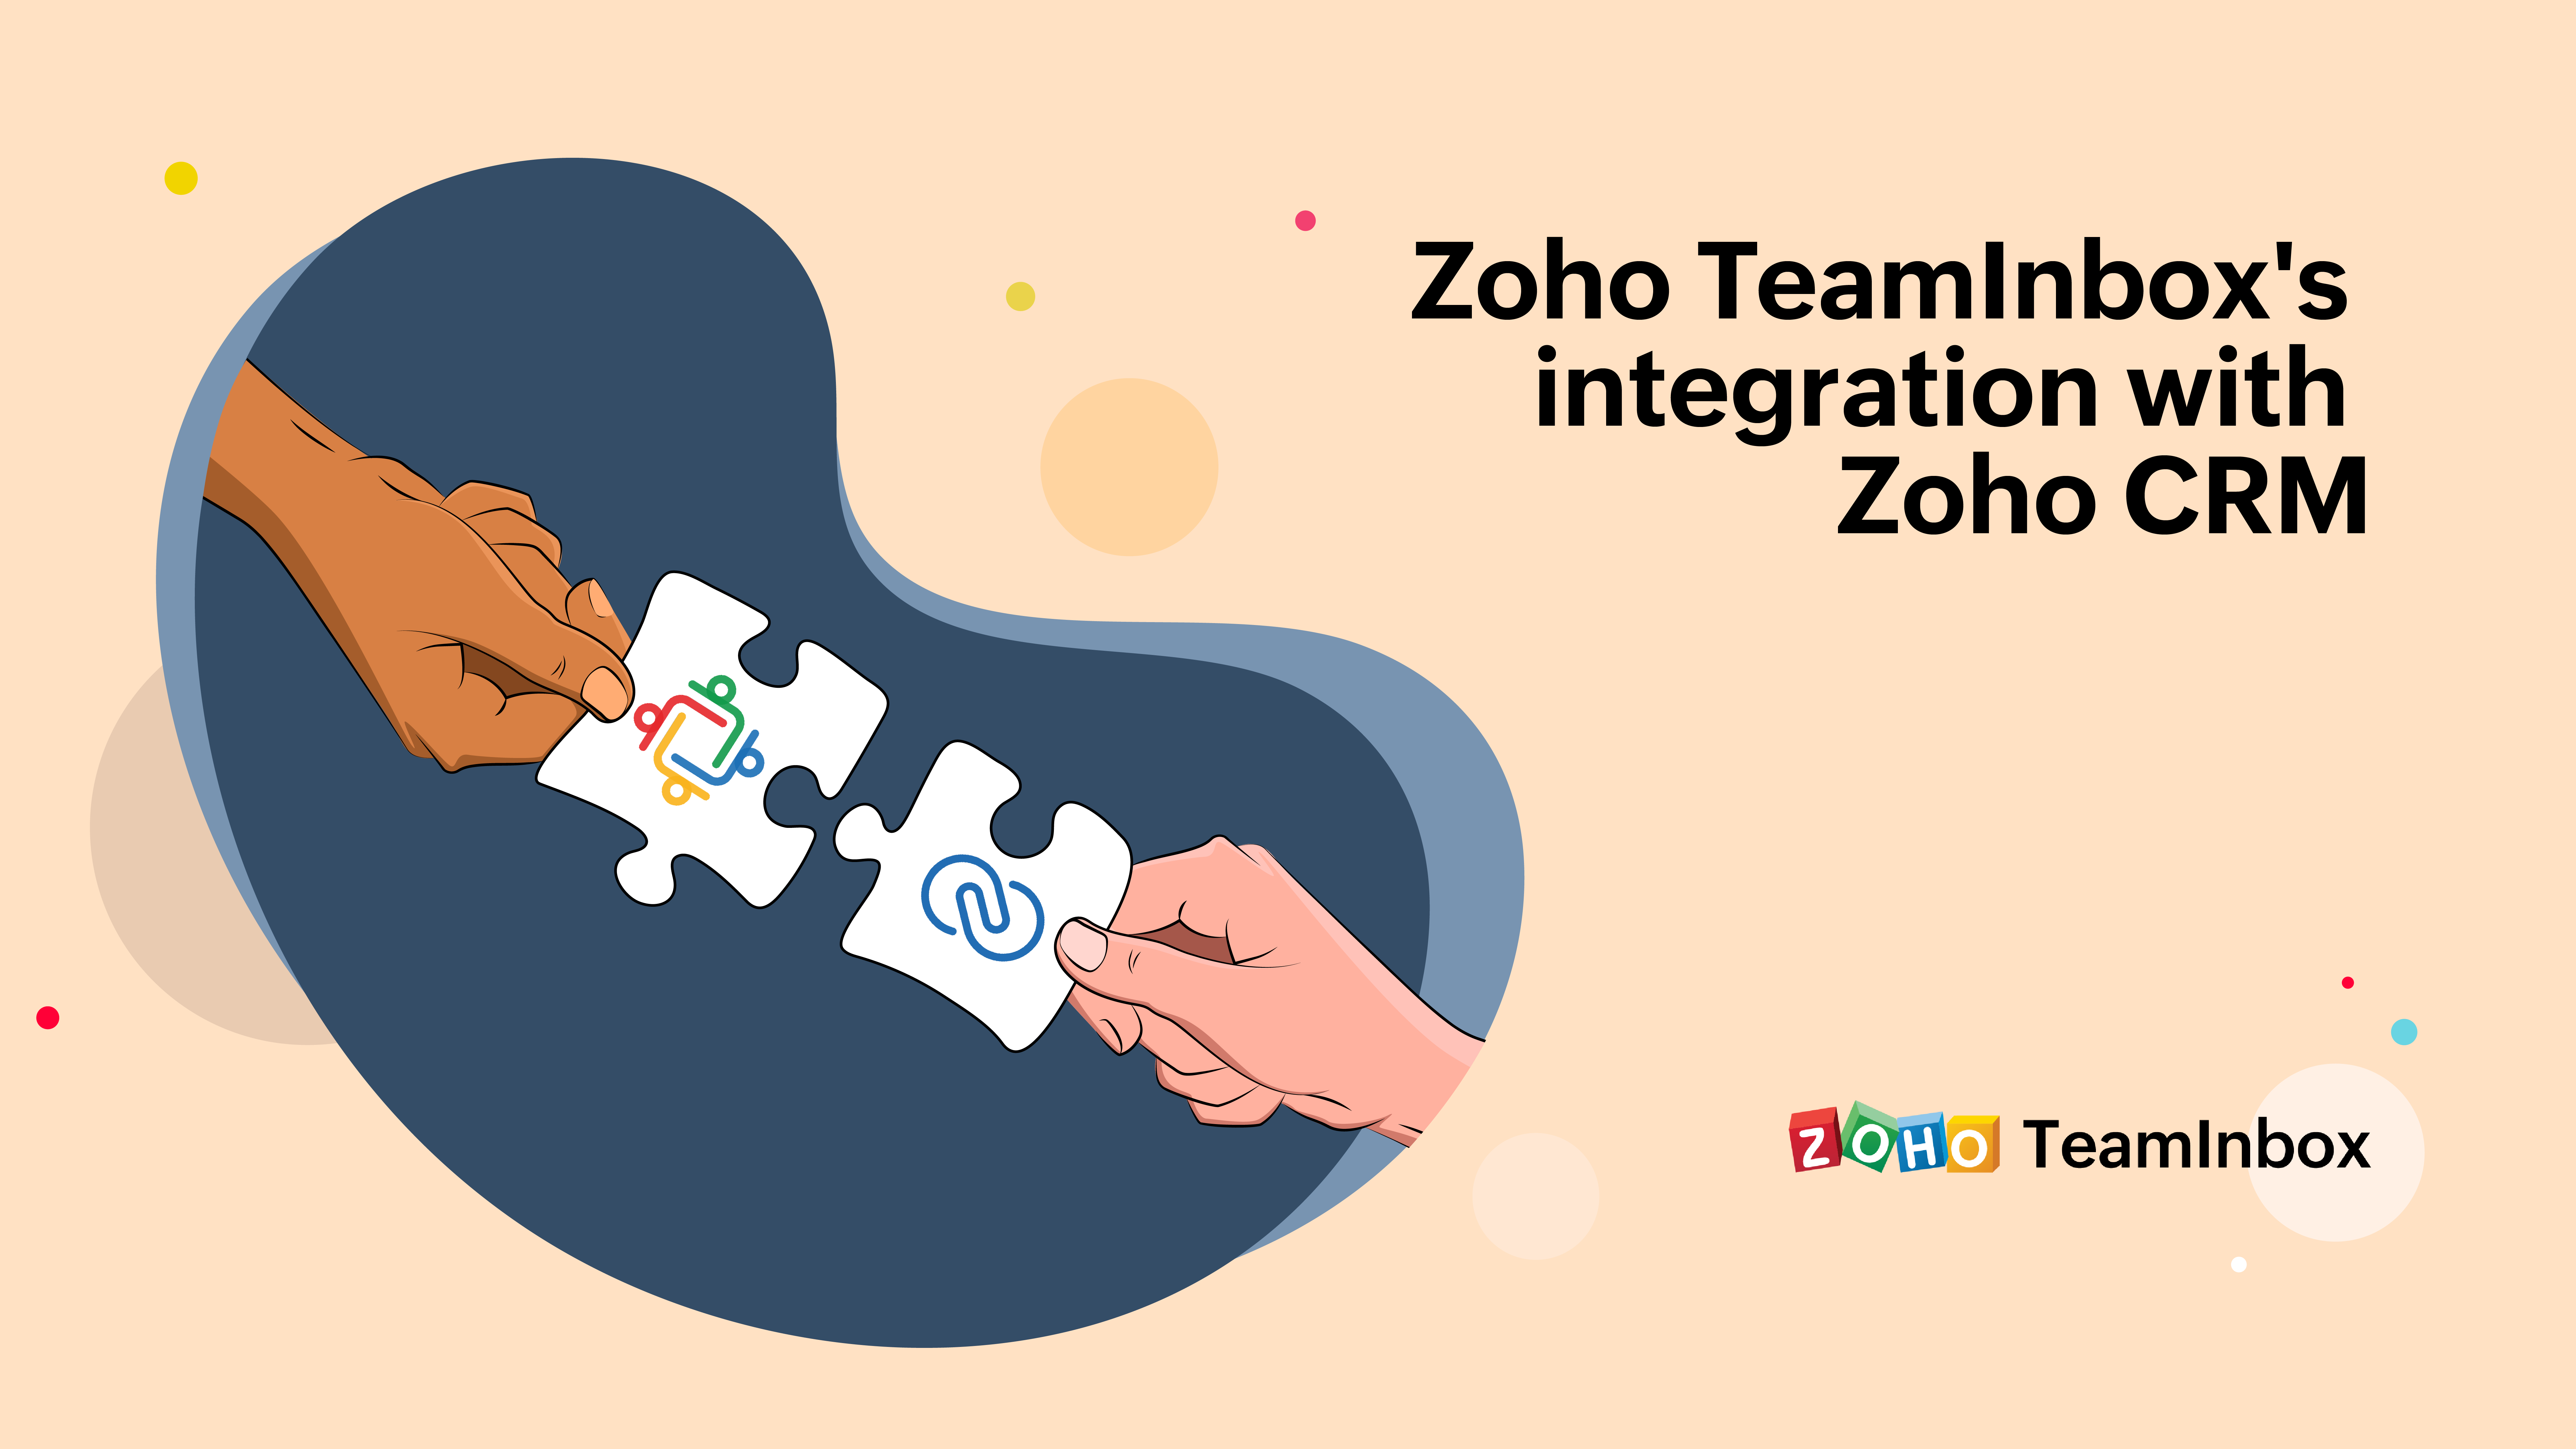 Zoho TeamInbox's integration with Zoho CRM